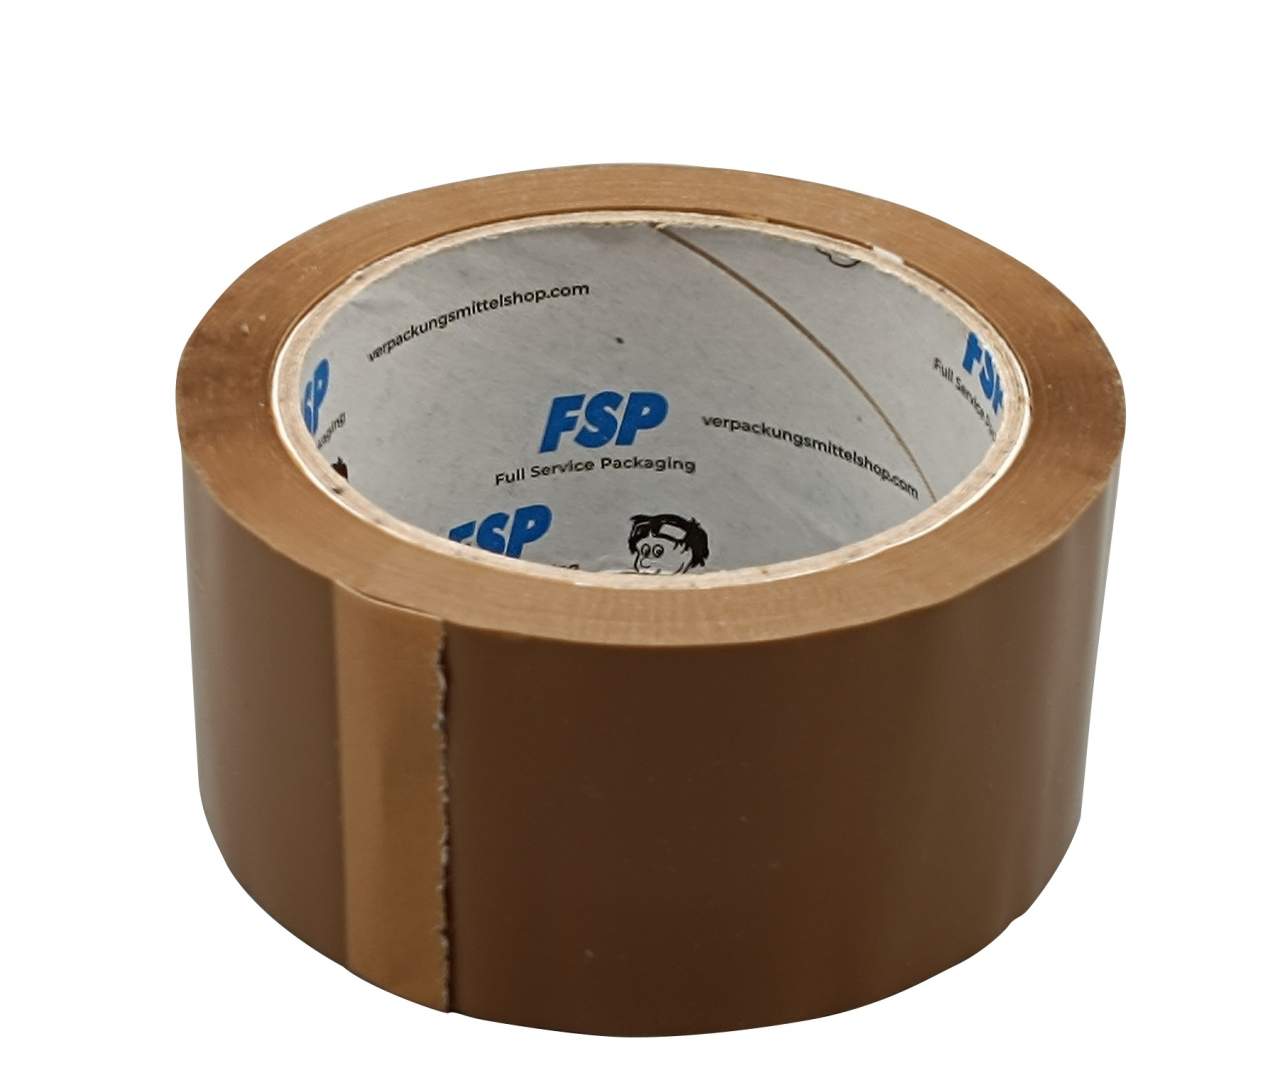 Verpackungsmittelshop-Klebeband-Kunststoff-Premium-Braun-High-Quality-leise